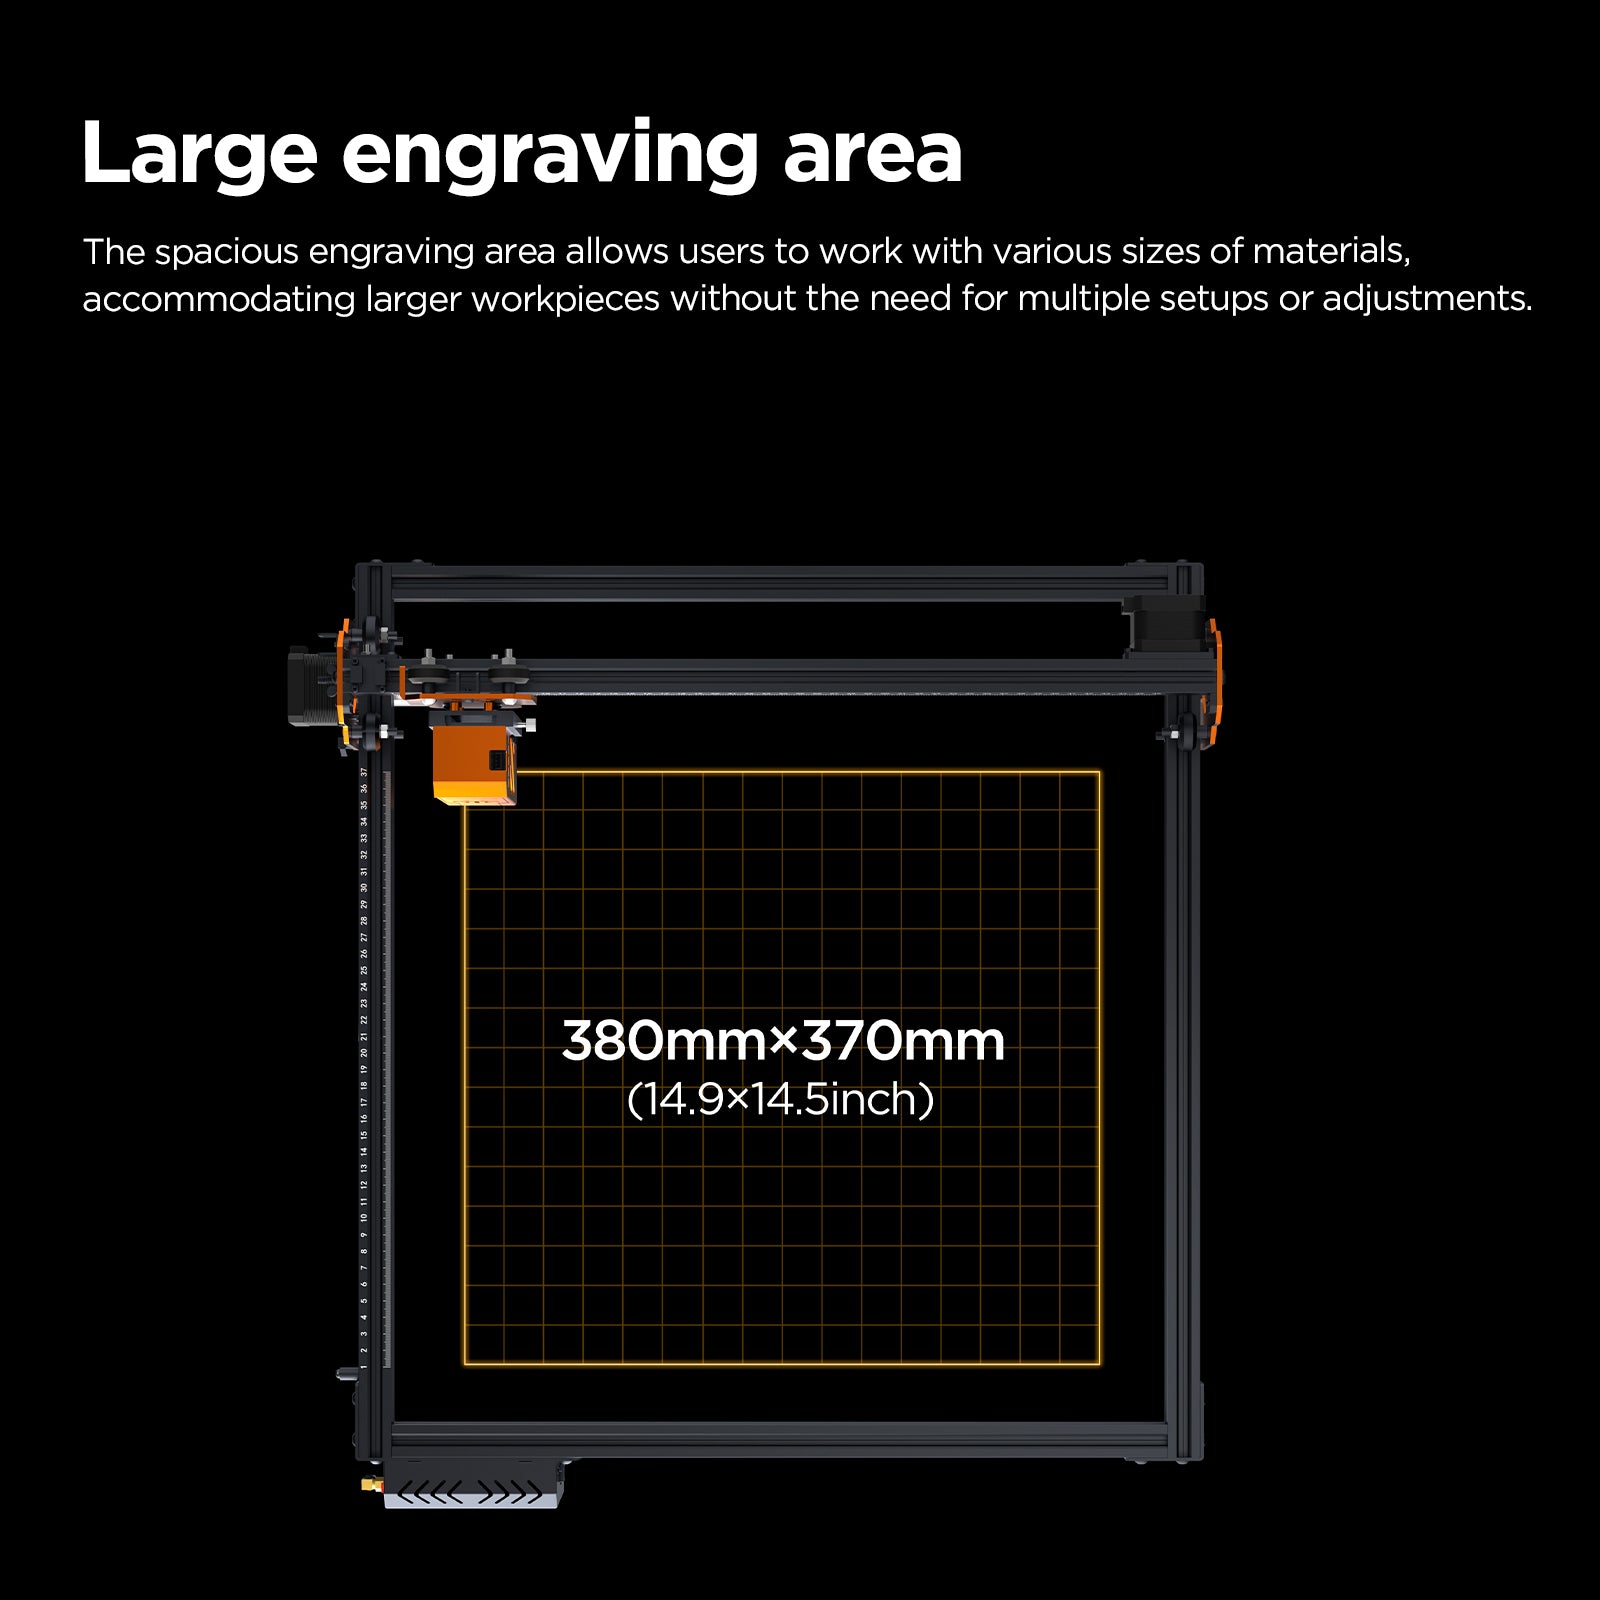 ACMER P1 S pro 6w best budget Laser Engraver Machine